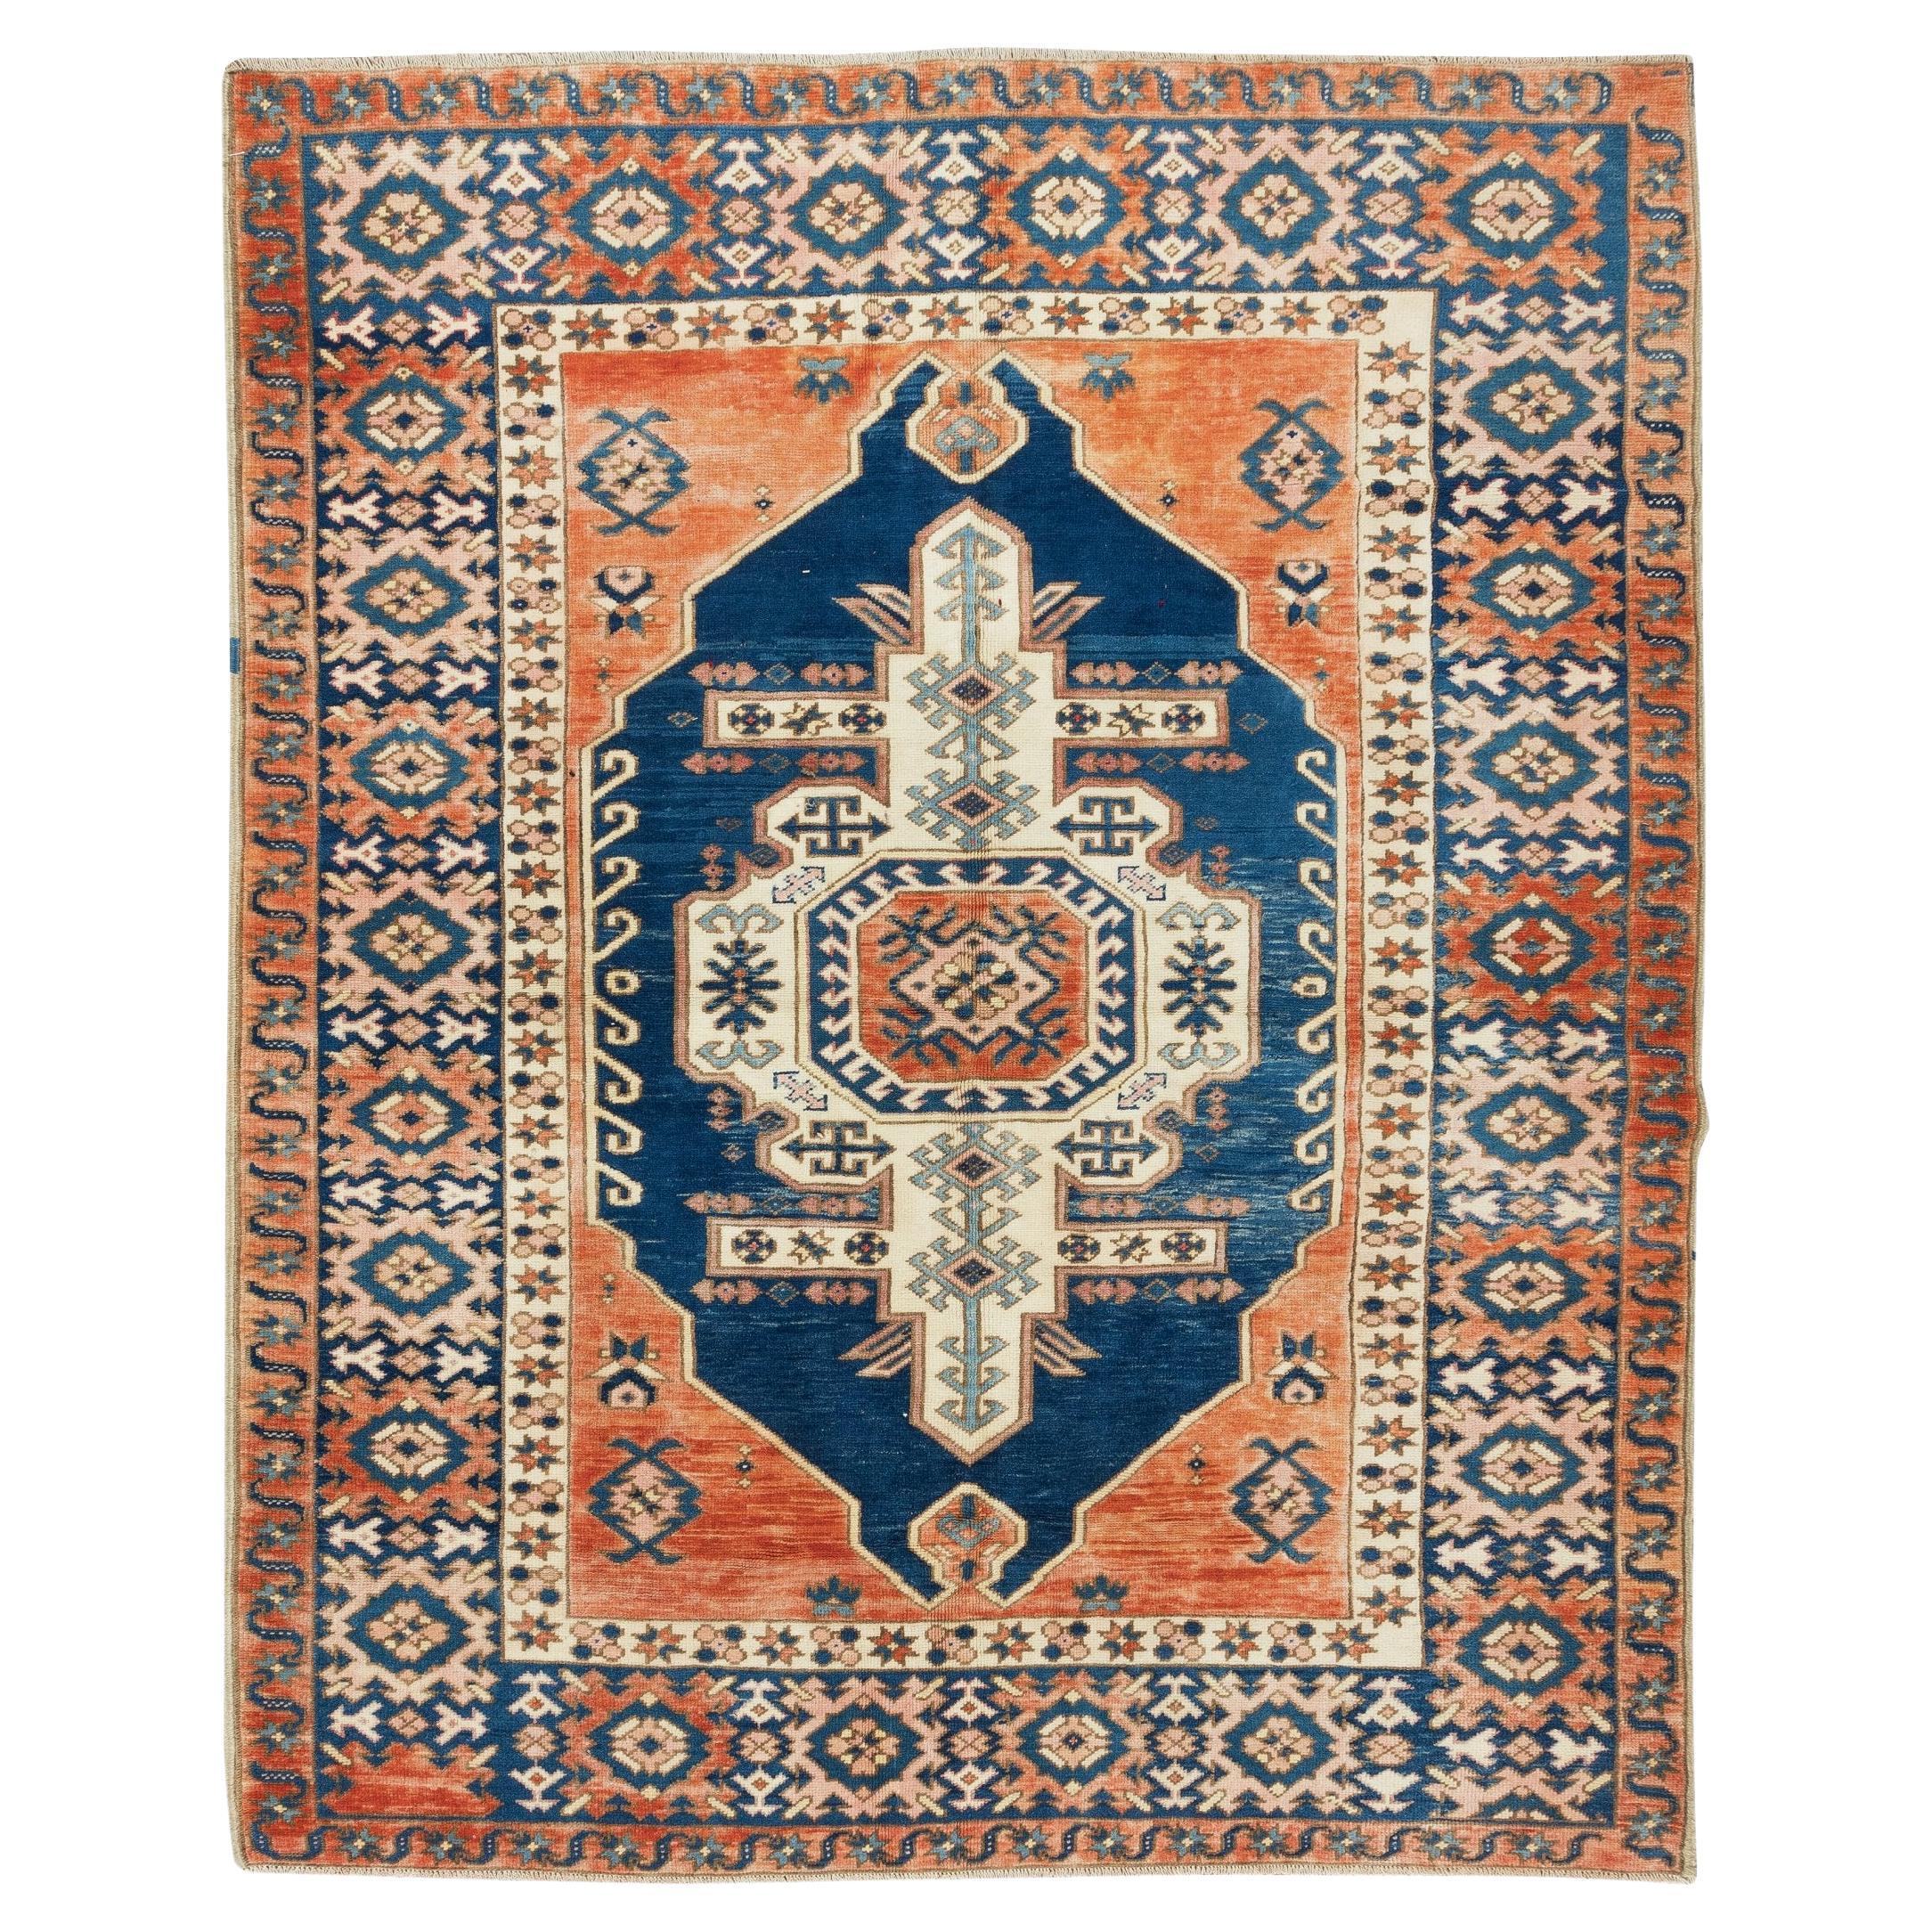 5.9x7.6 Ft Hand-Made Turkish Wool Area Rug, Mid-Century Geometric Pattern Carpet